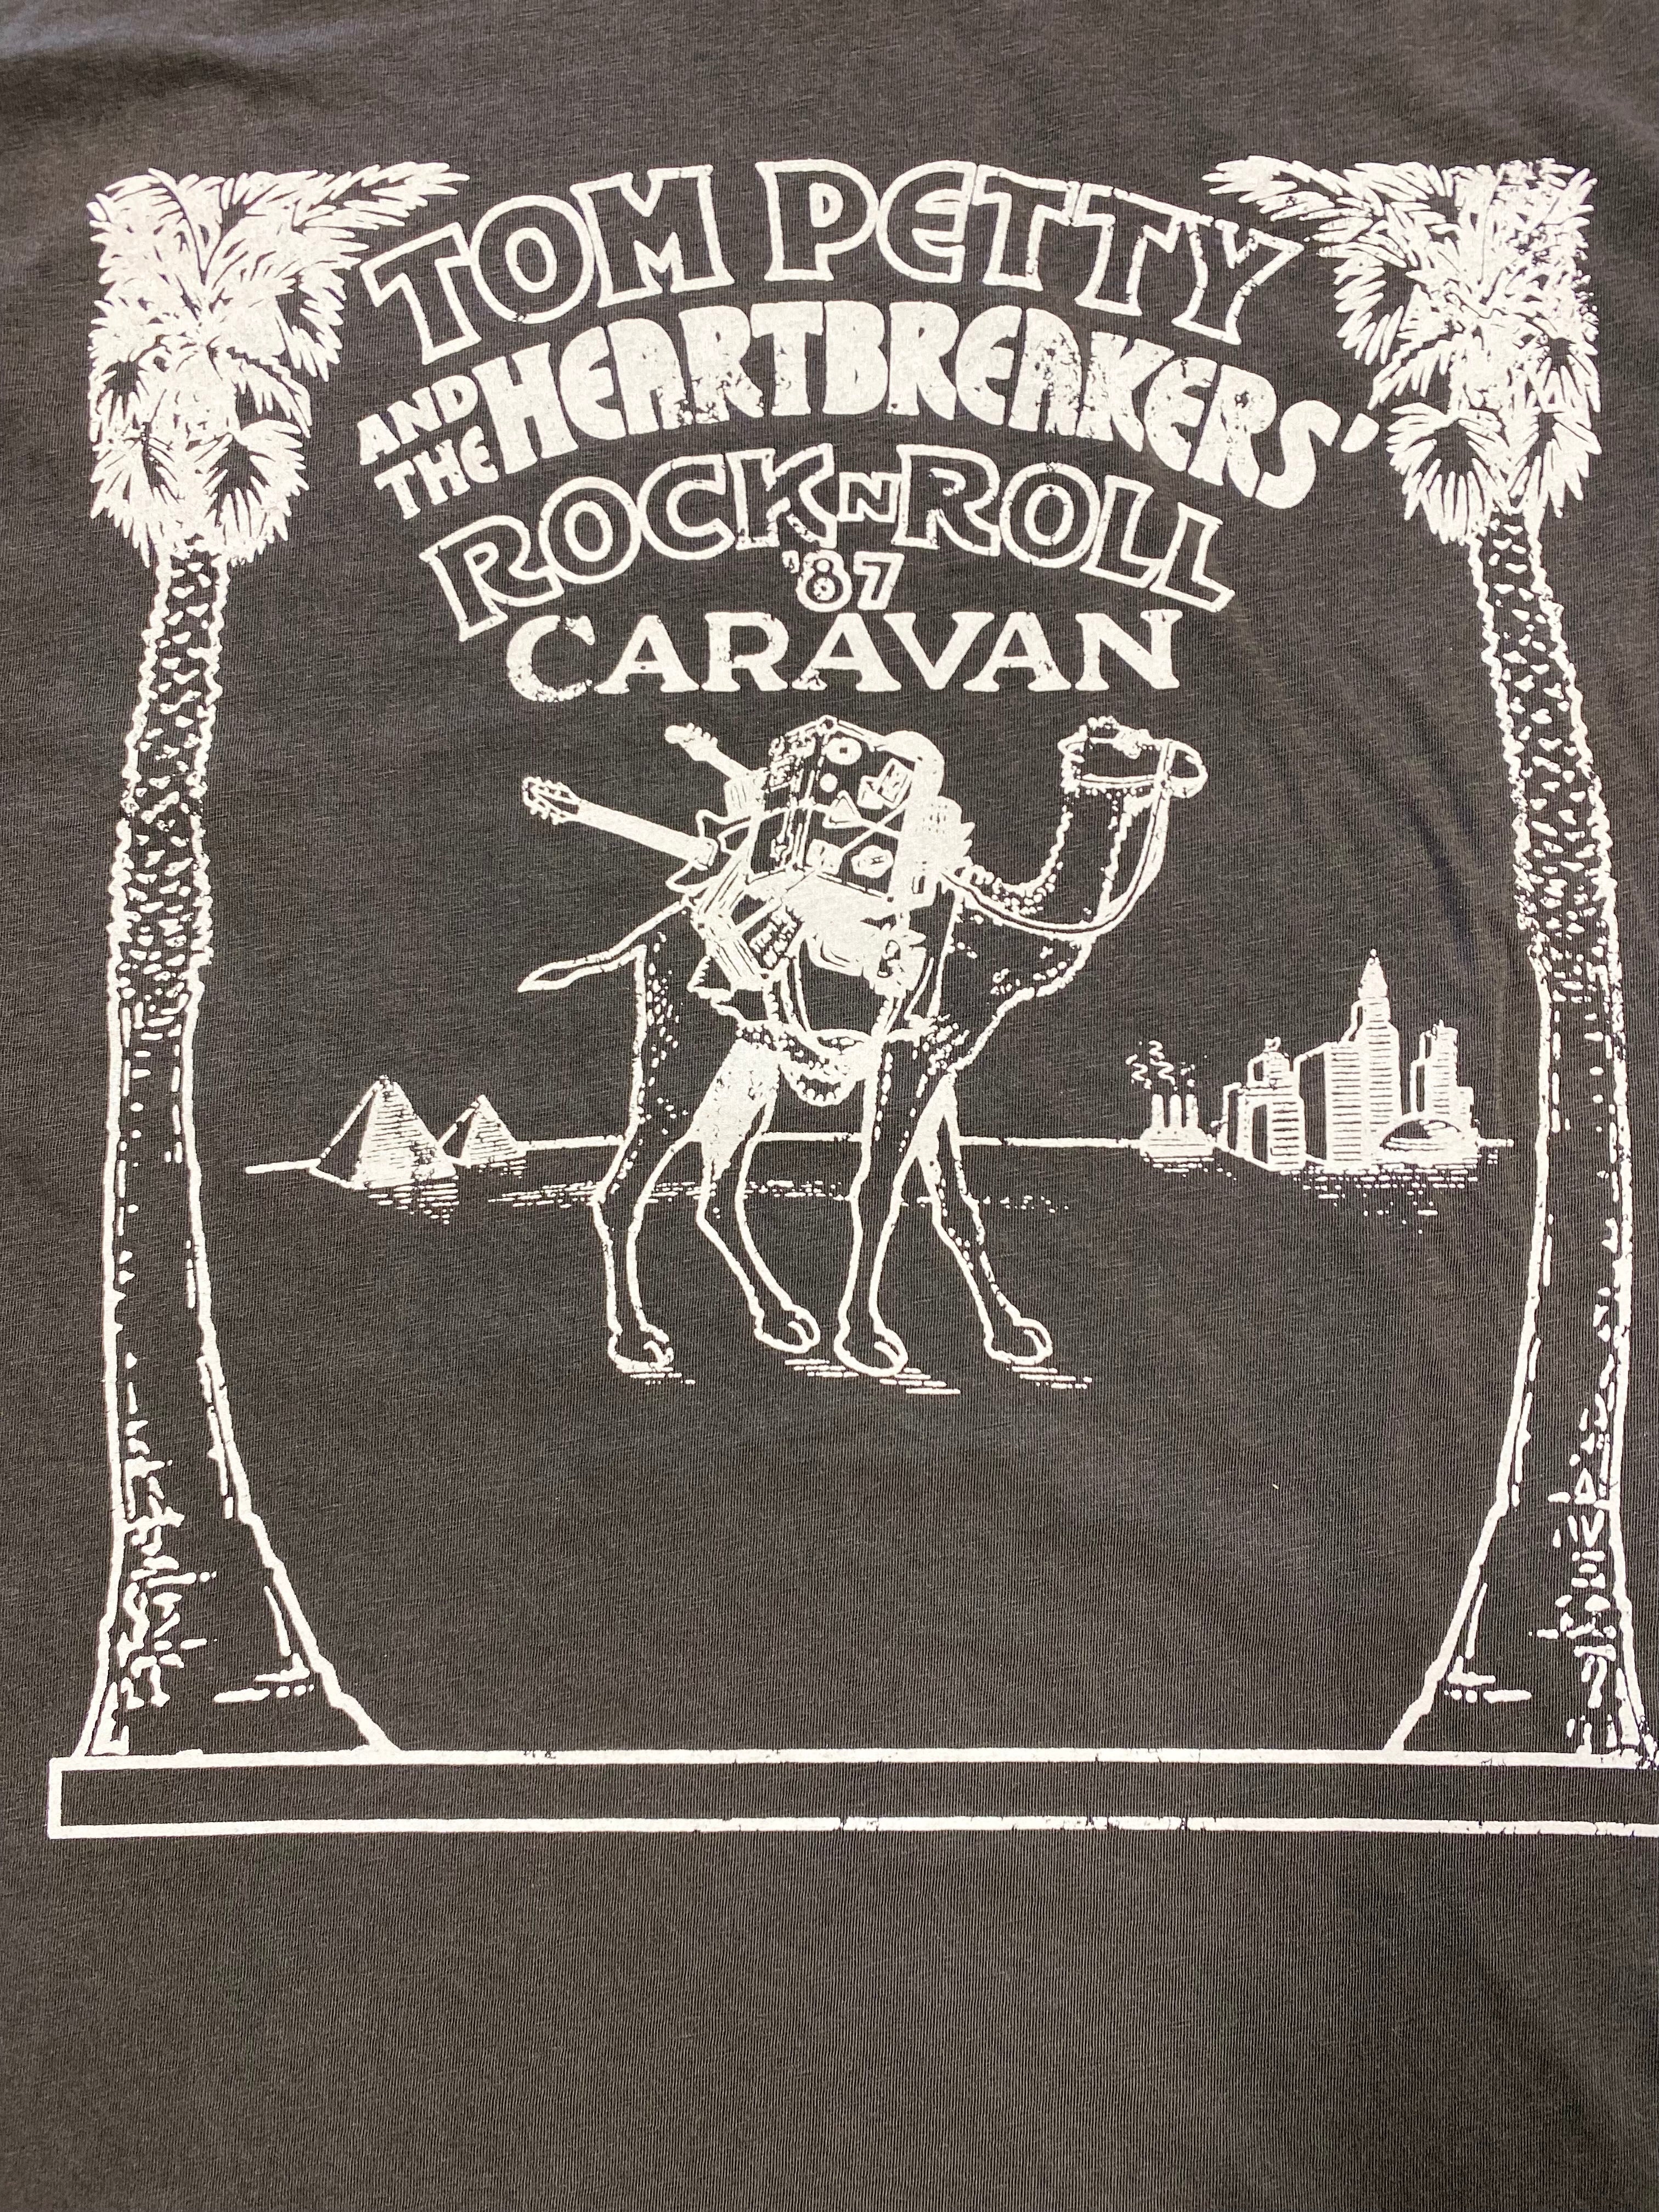 Tom Petty and the Heartbreakers' Rock N' Roll Caravan